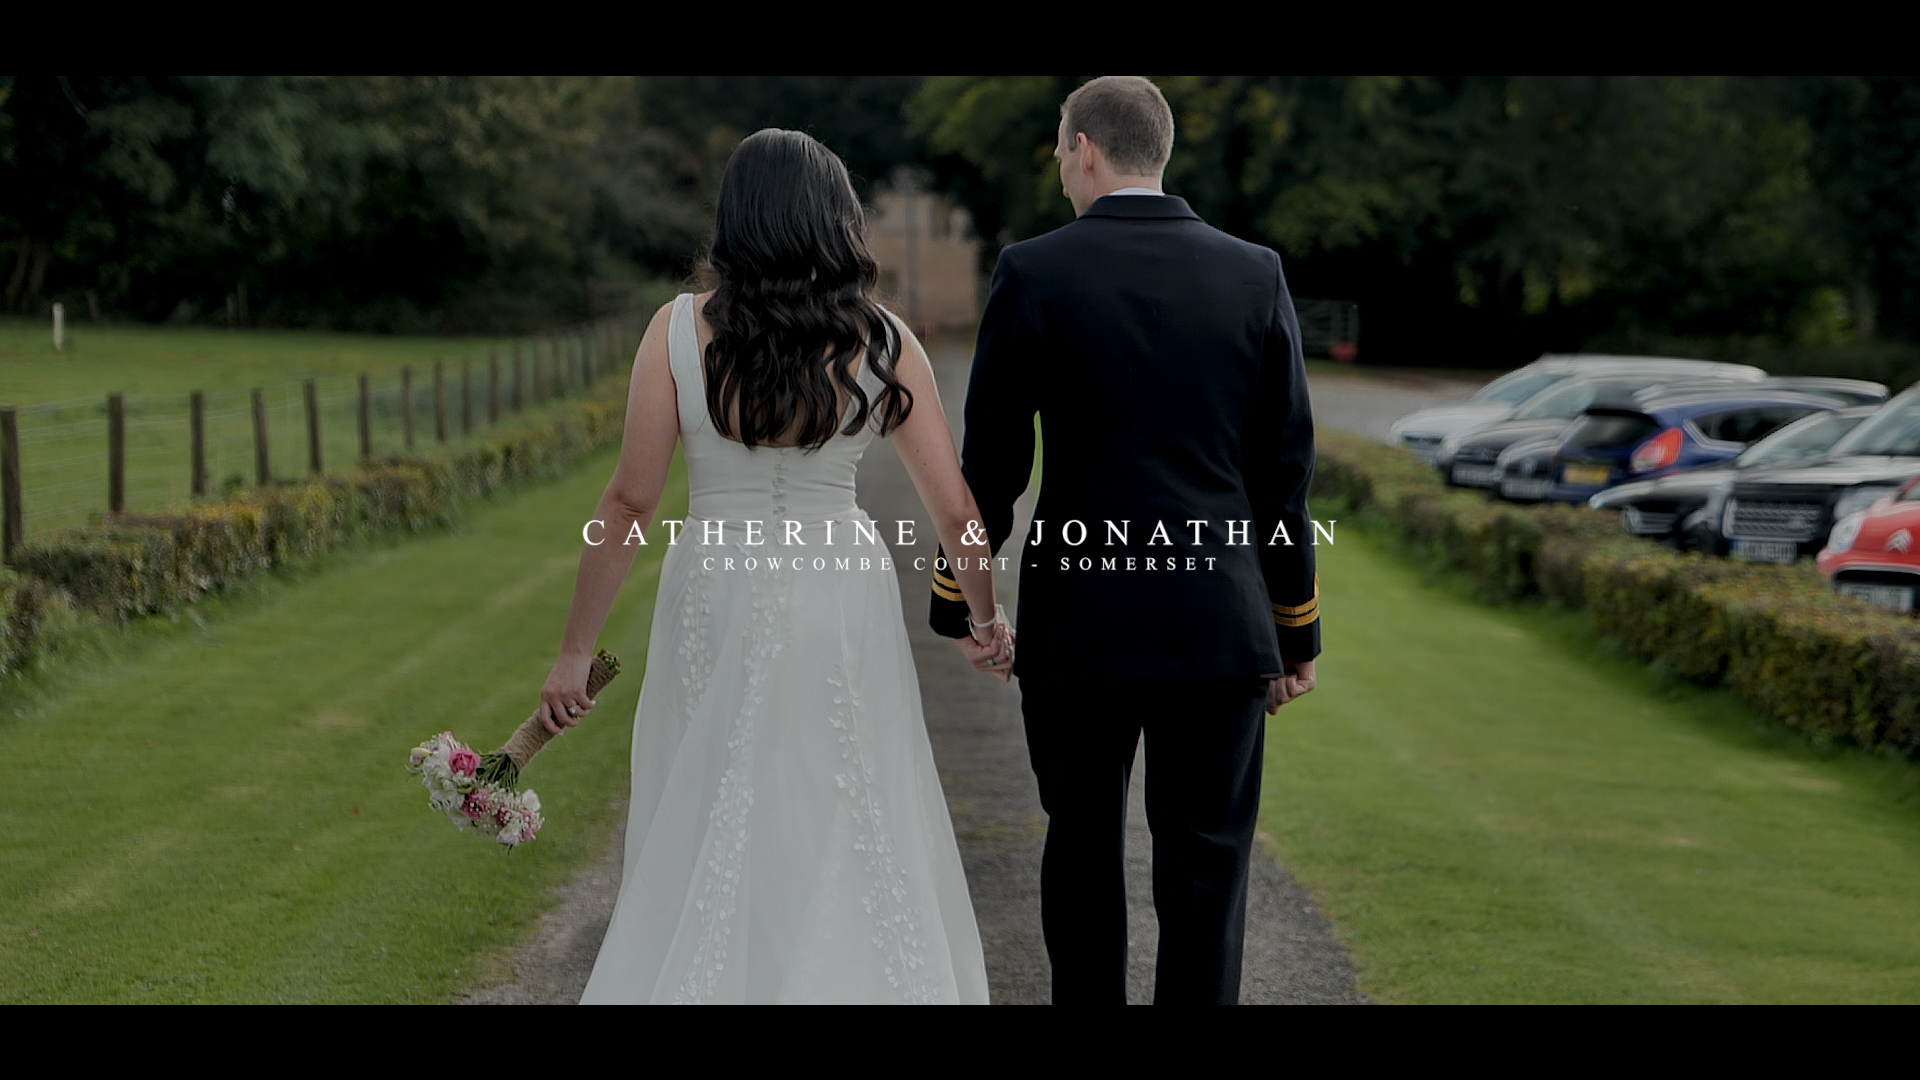 Catherine and Jonathan